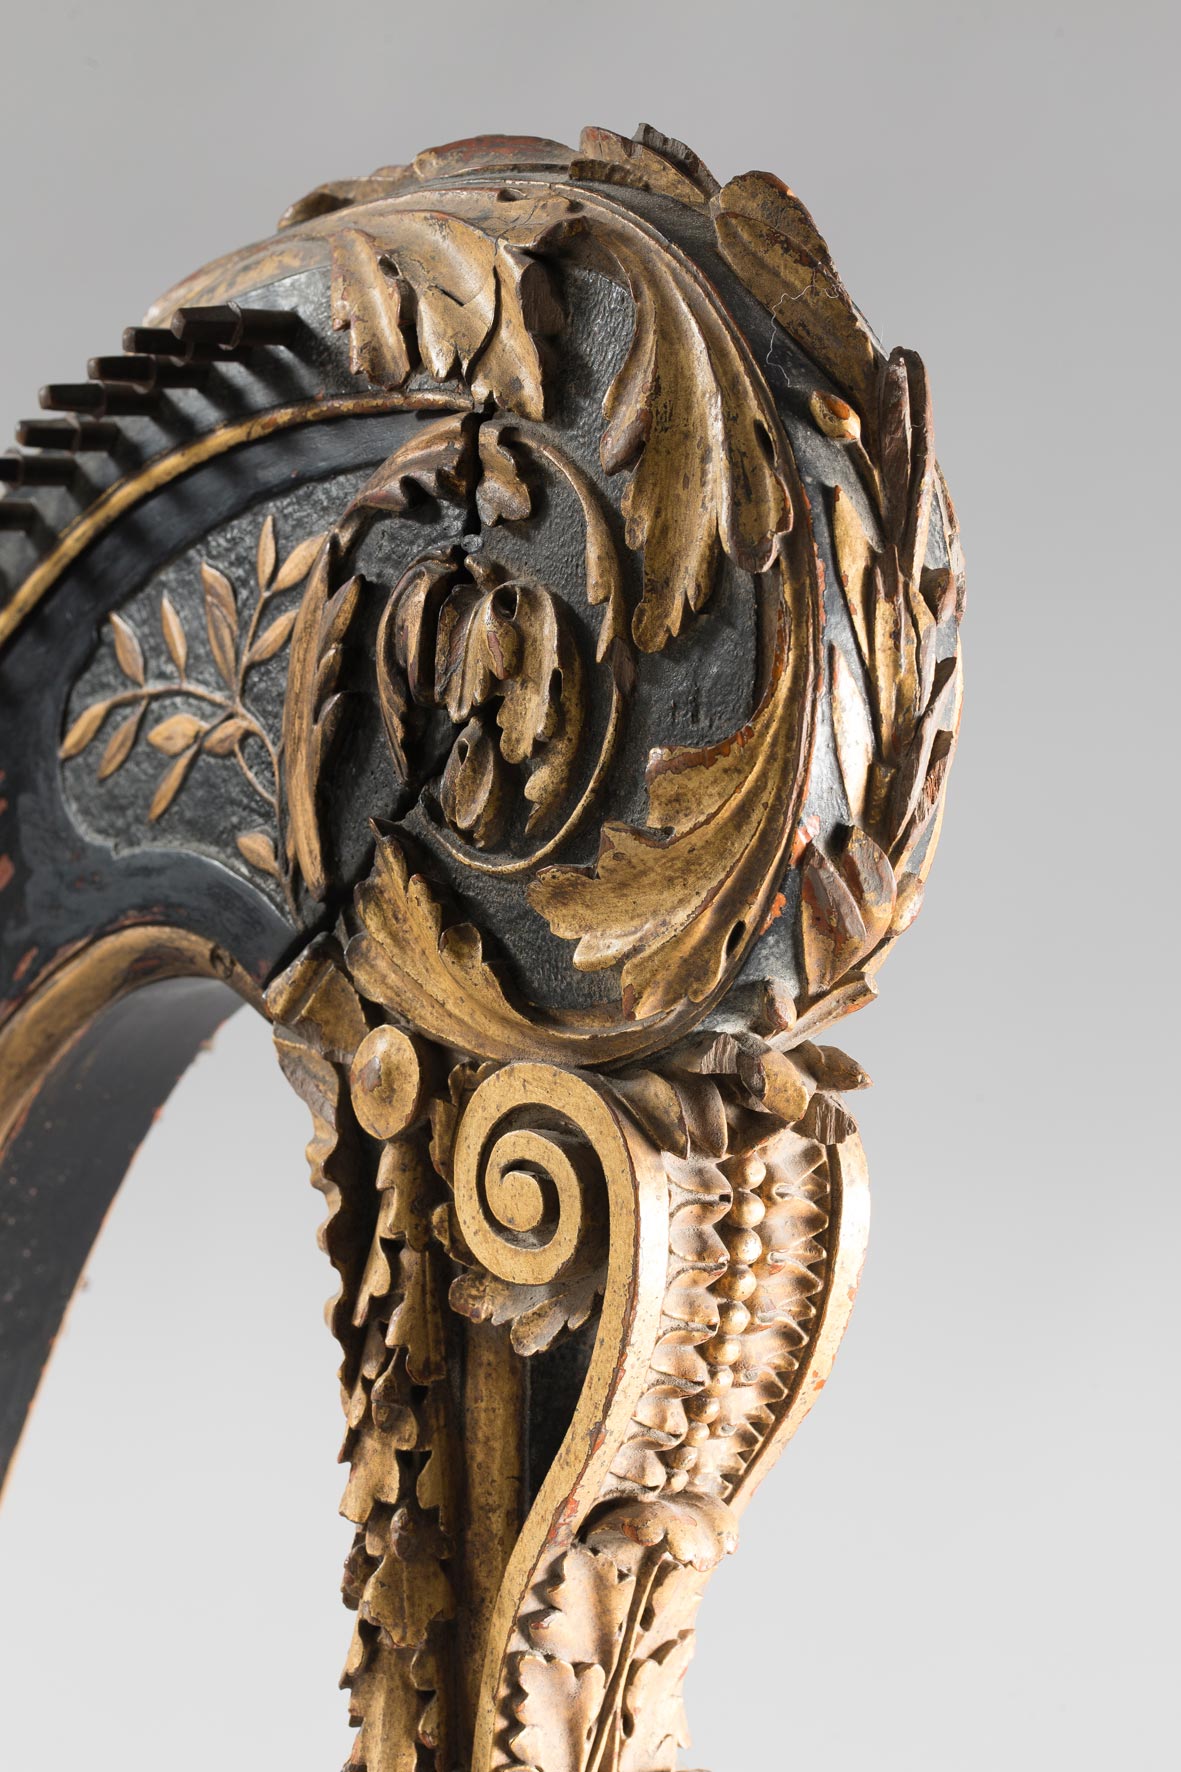 Harpe à crosse, à sept pédales de HOLTZMAN, seconde moitié du XVIIIème à Paris — Collection Samoyault